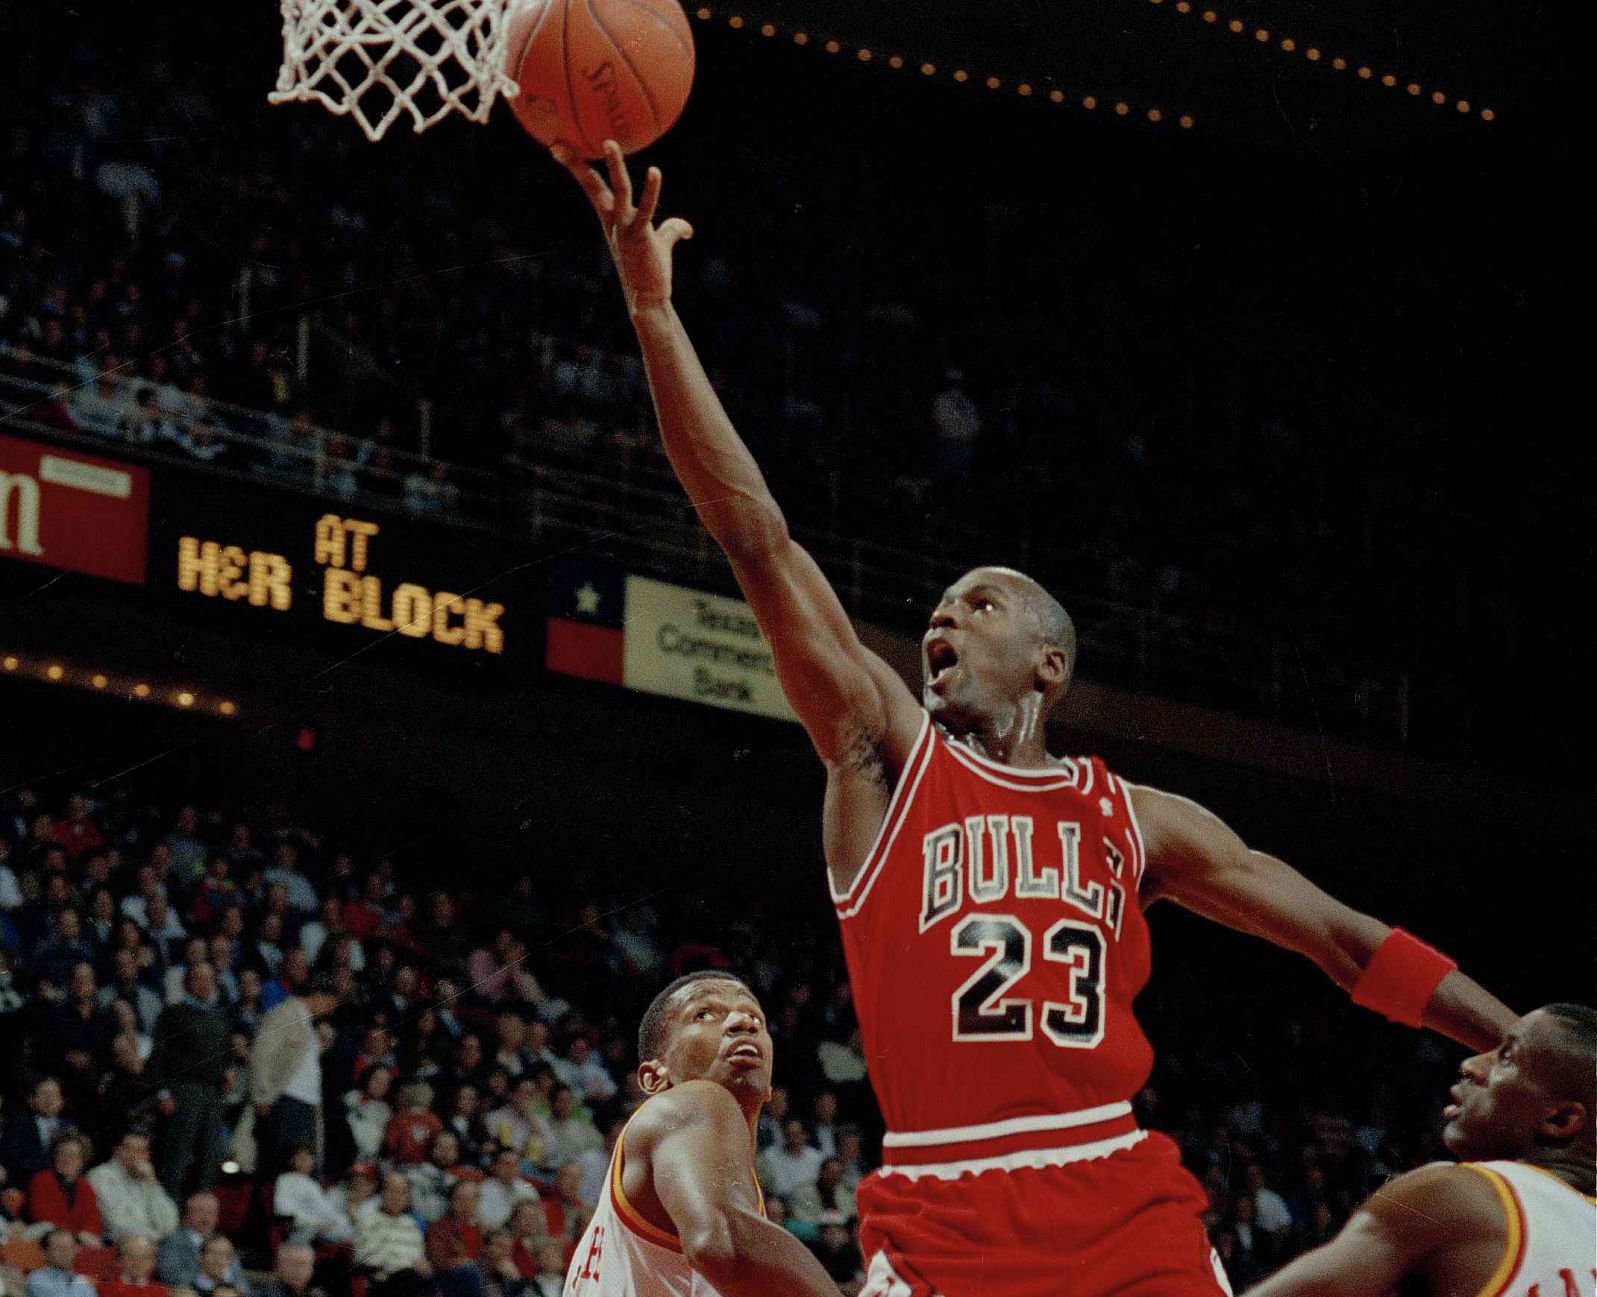 Basketball legend Michael Jordan soars 